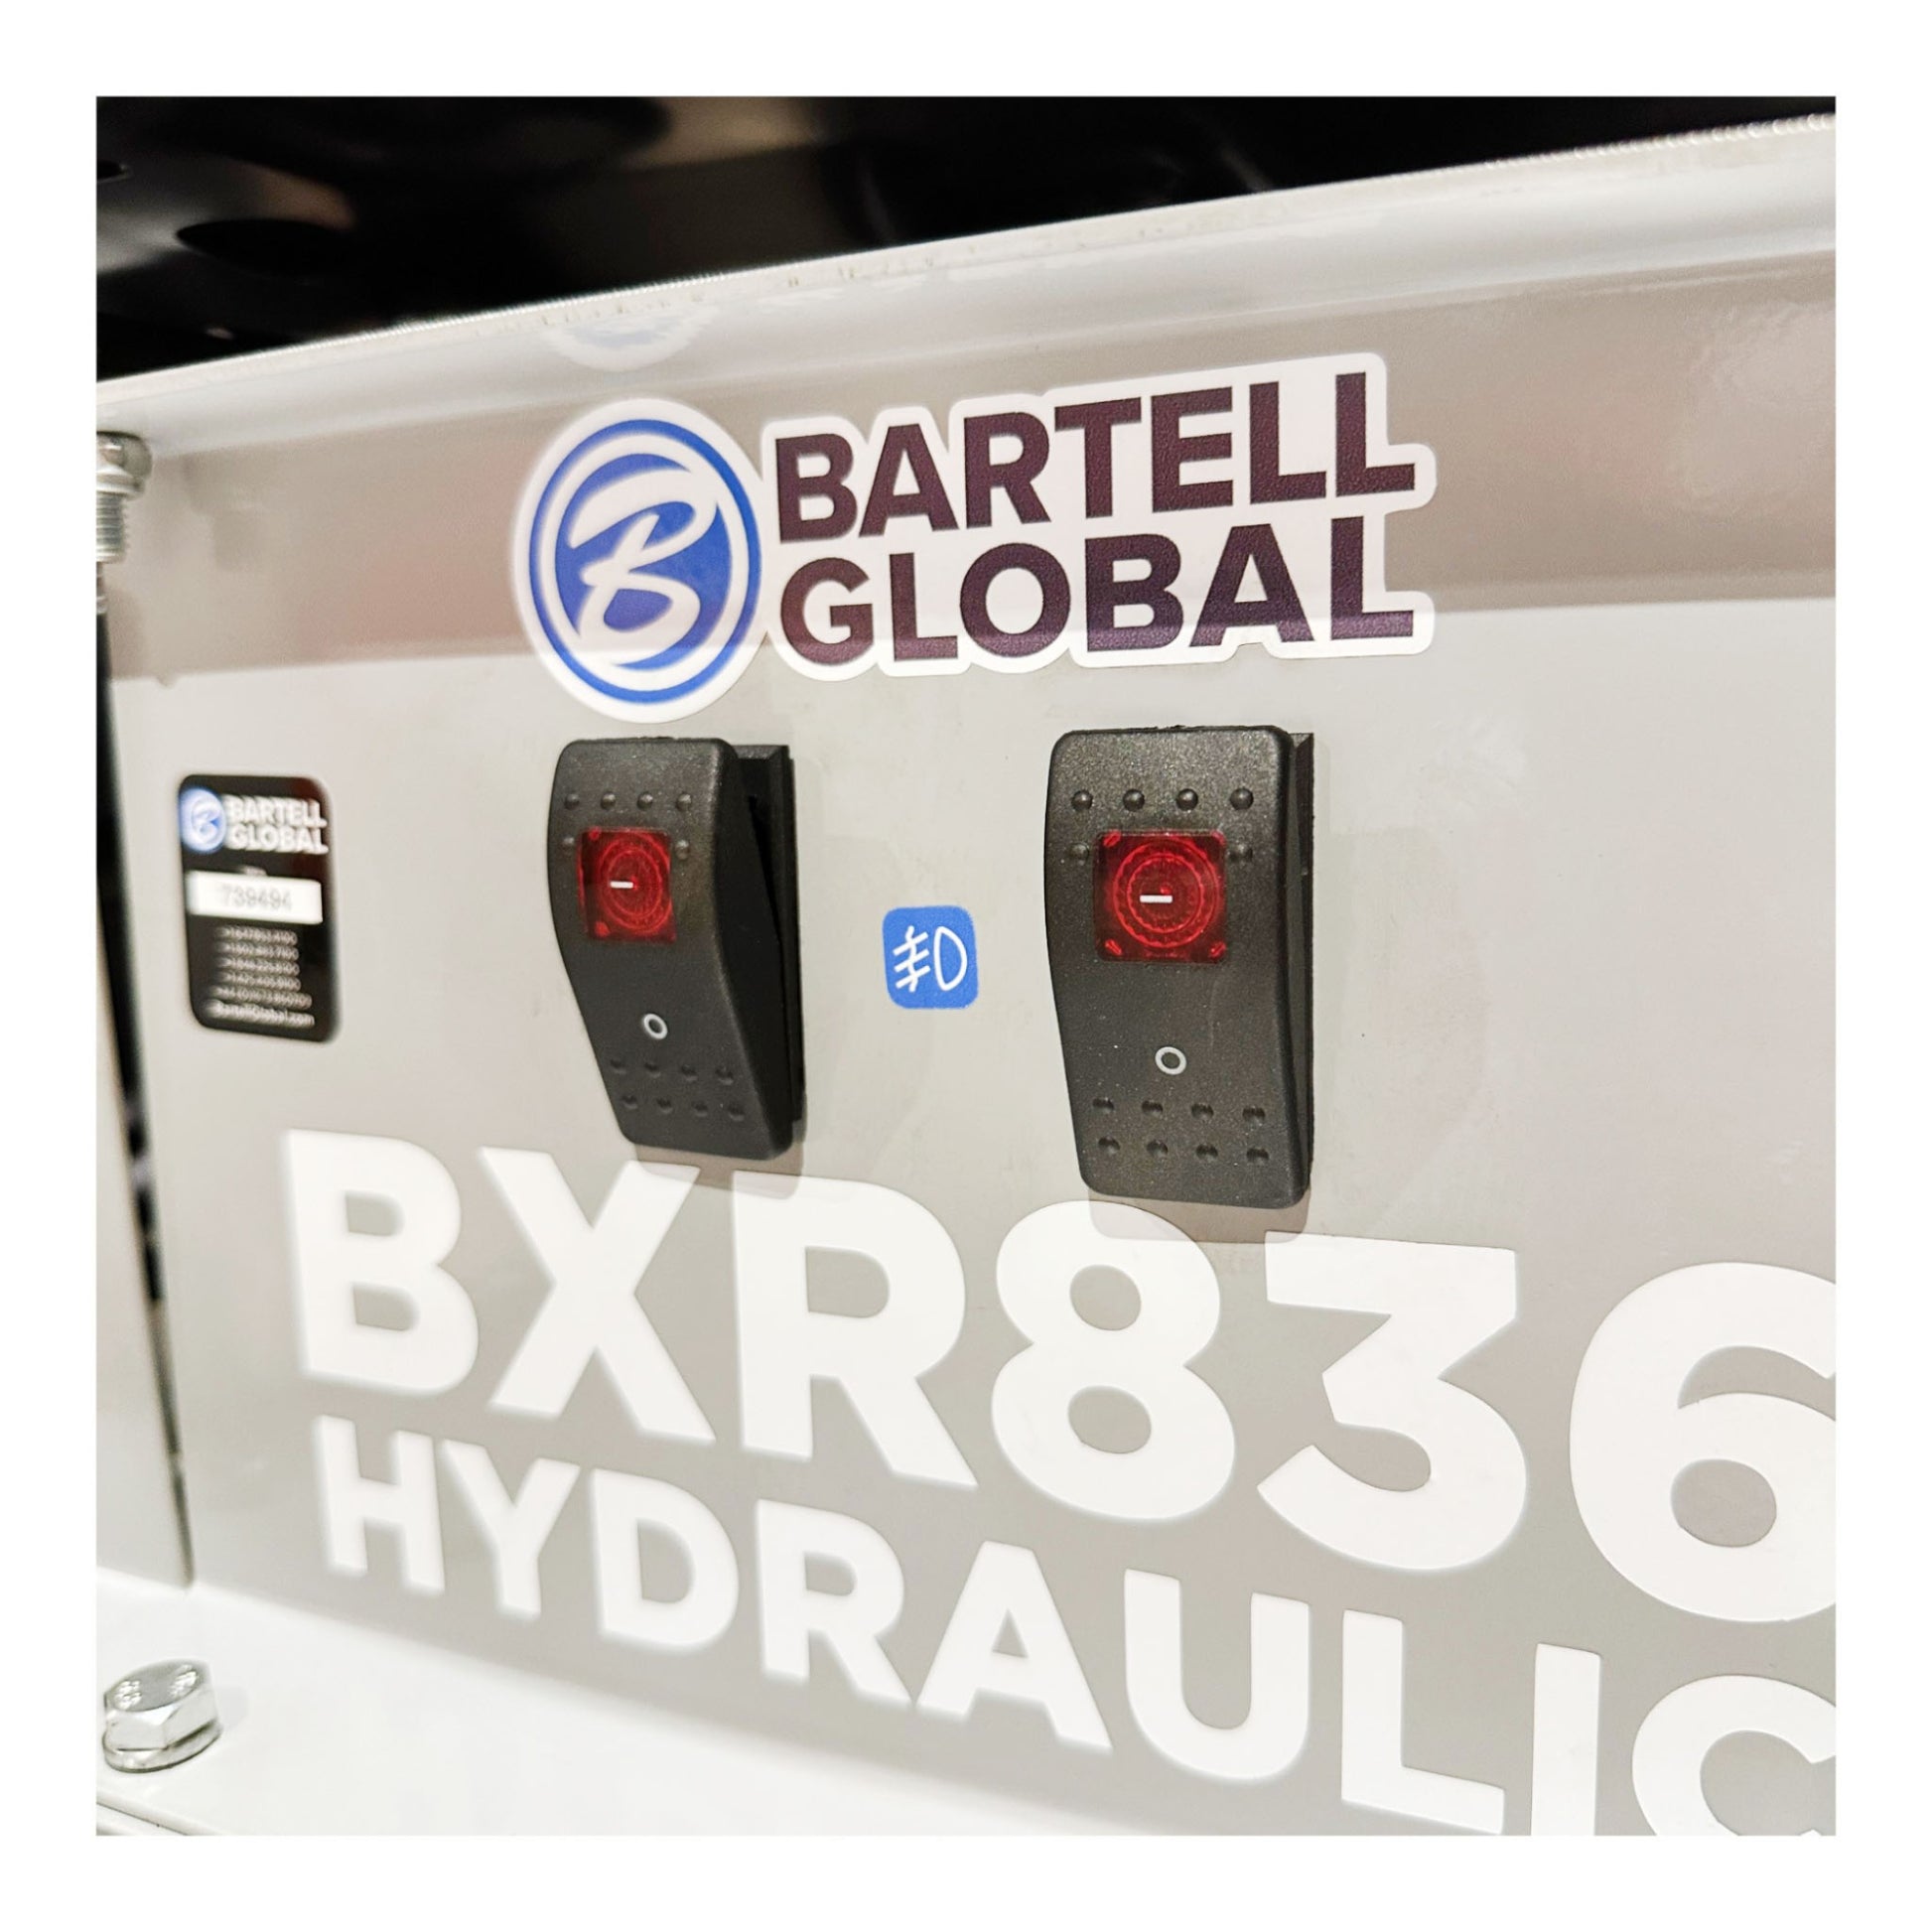 Paleta hidráulica Bartell BXR836H de 36 pulgadas